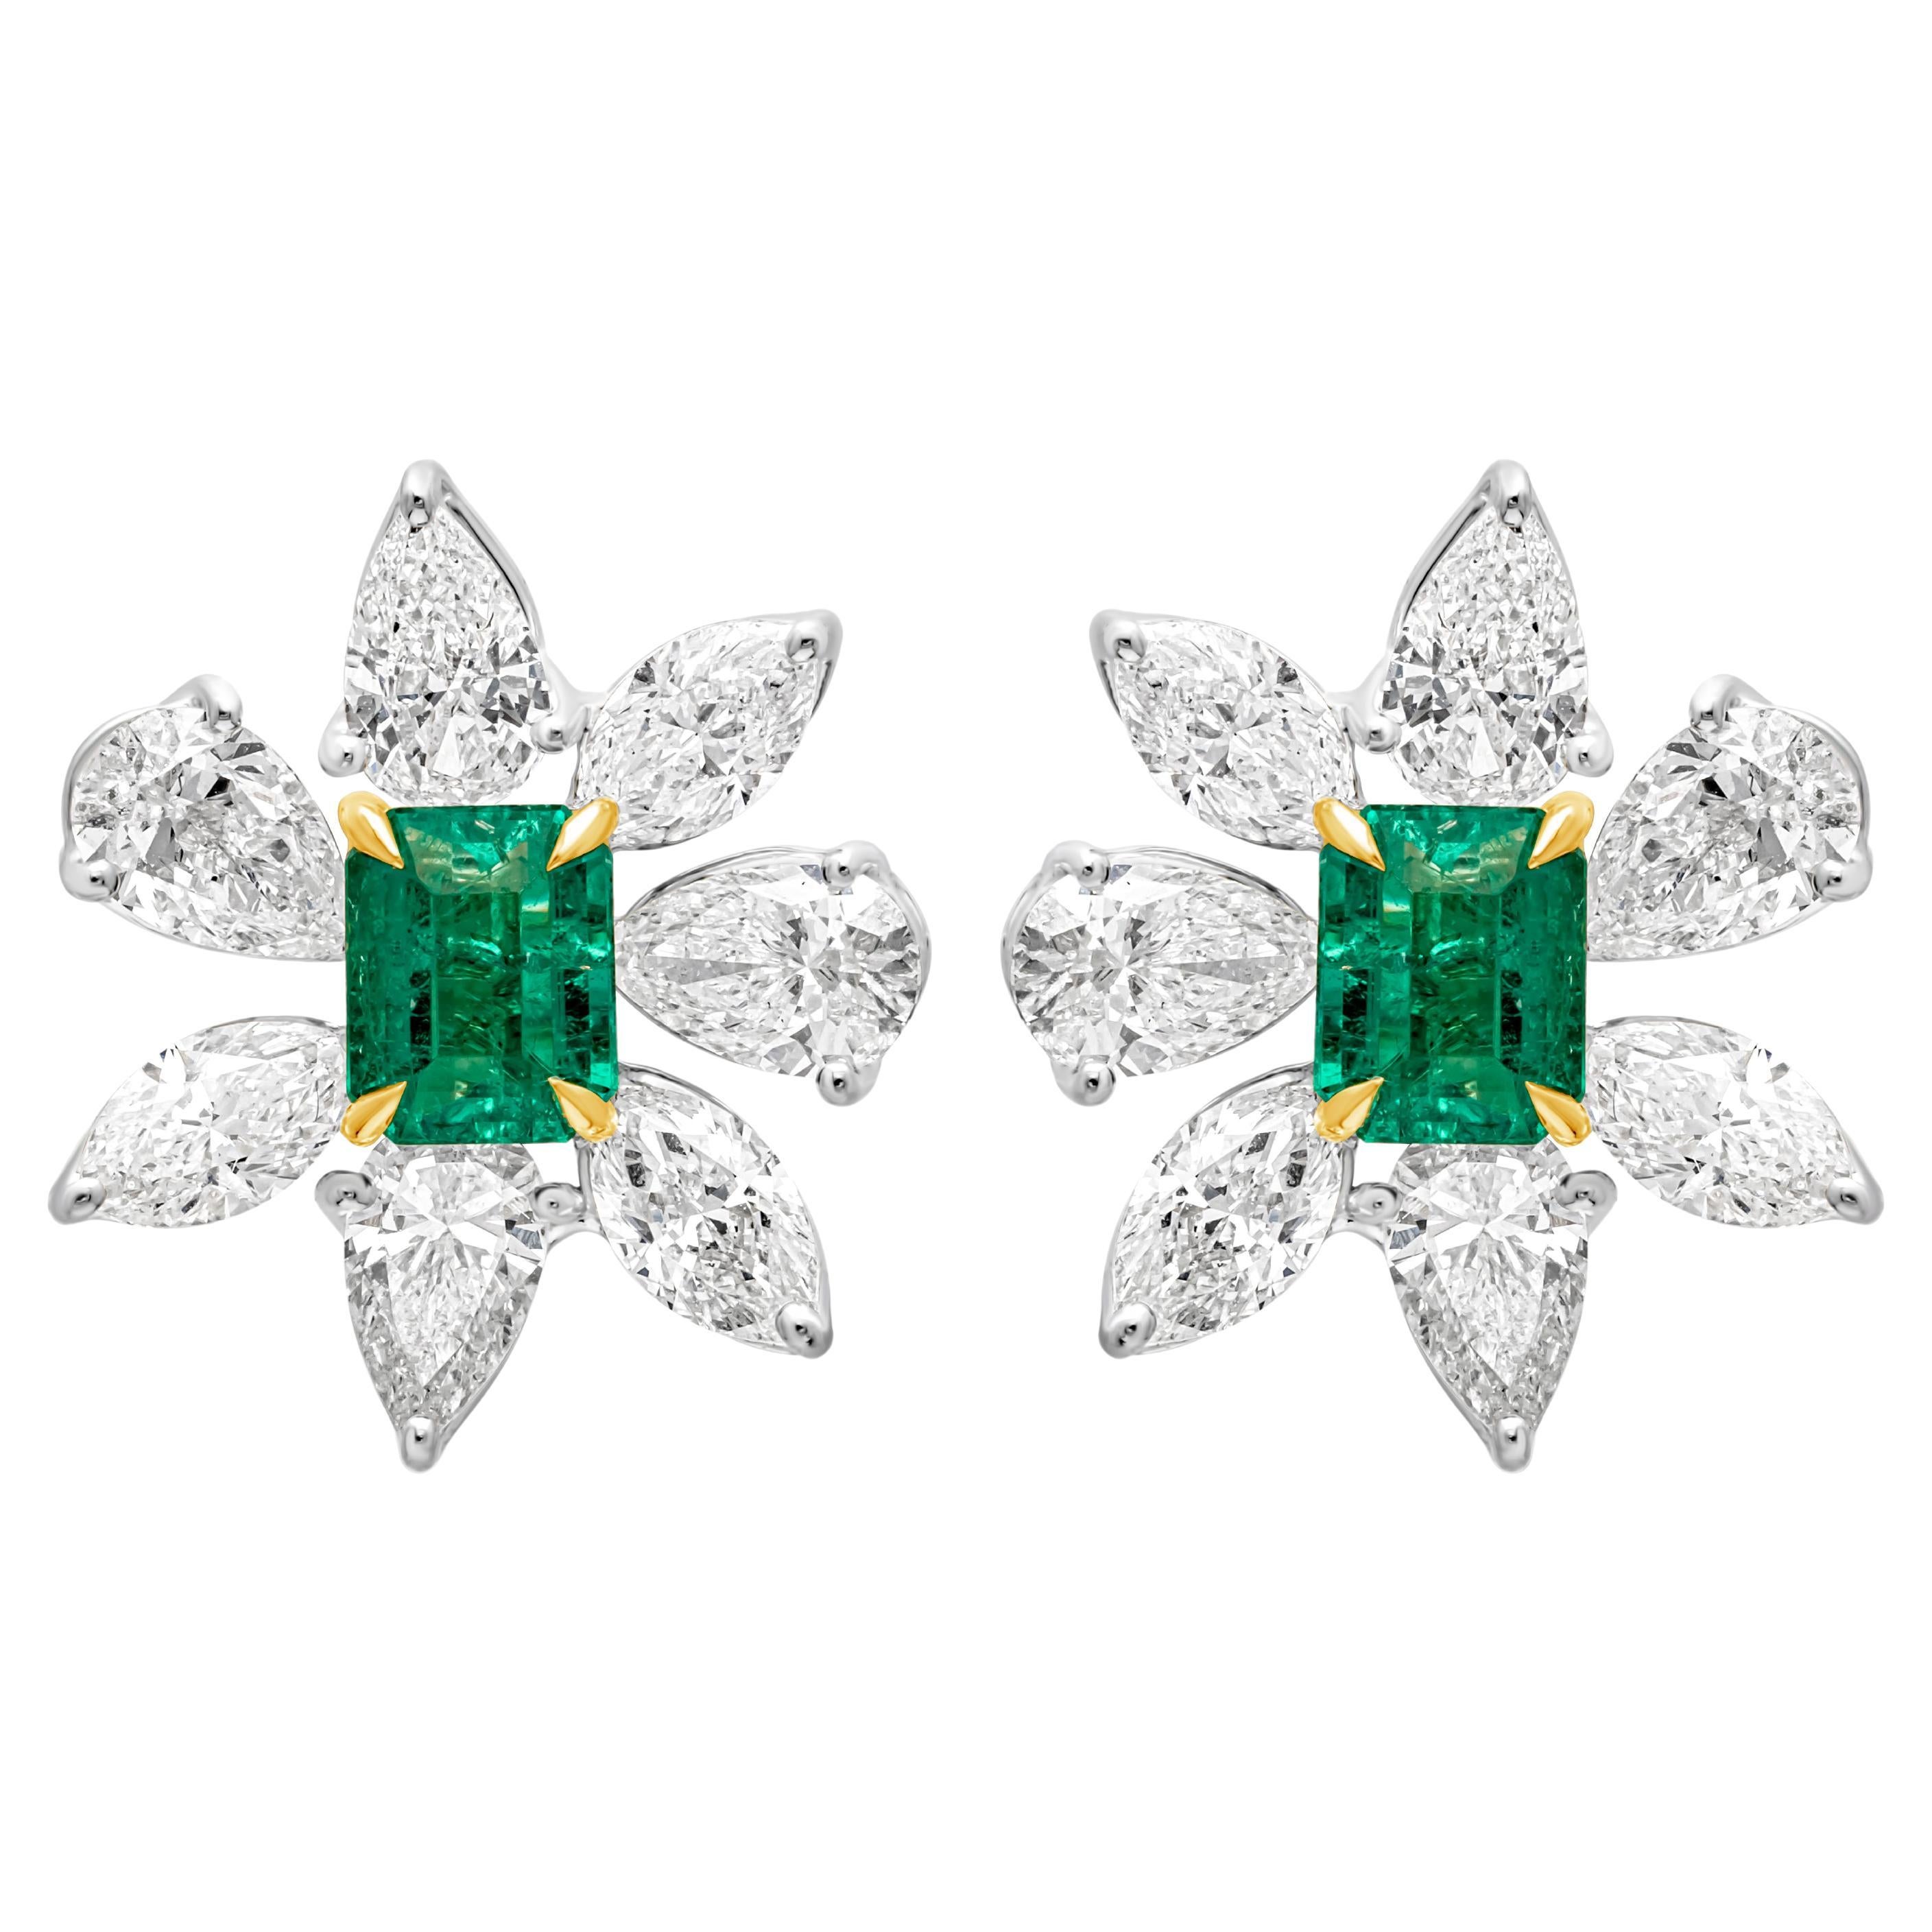 1.17 Carats Total Radiant Cut Green Emerald & Mixed Cut Diamond Stud Earrings For Sale